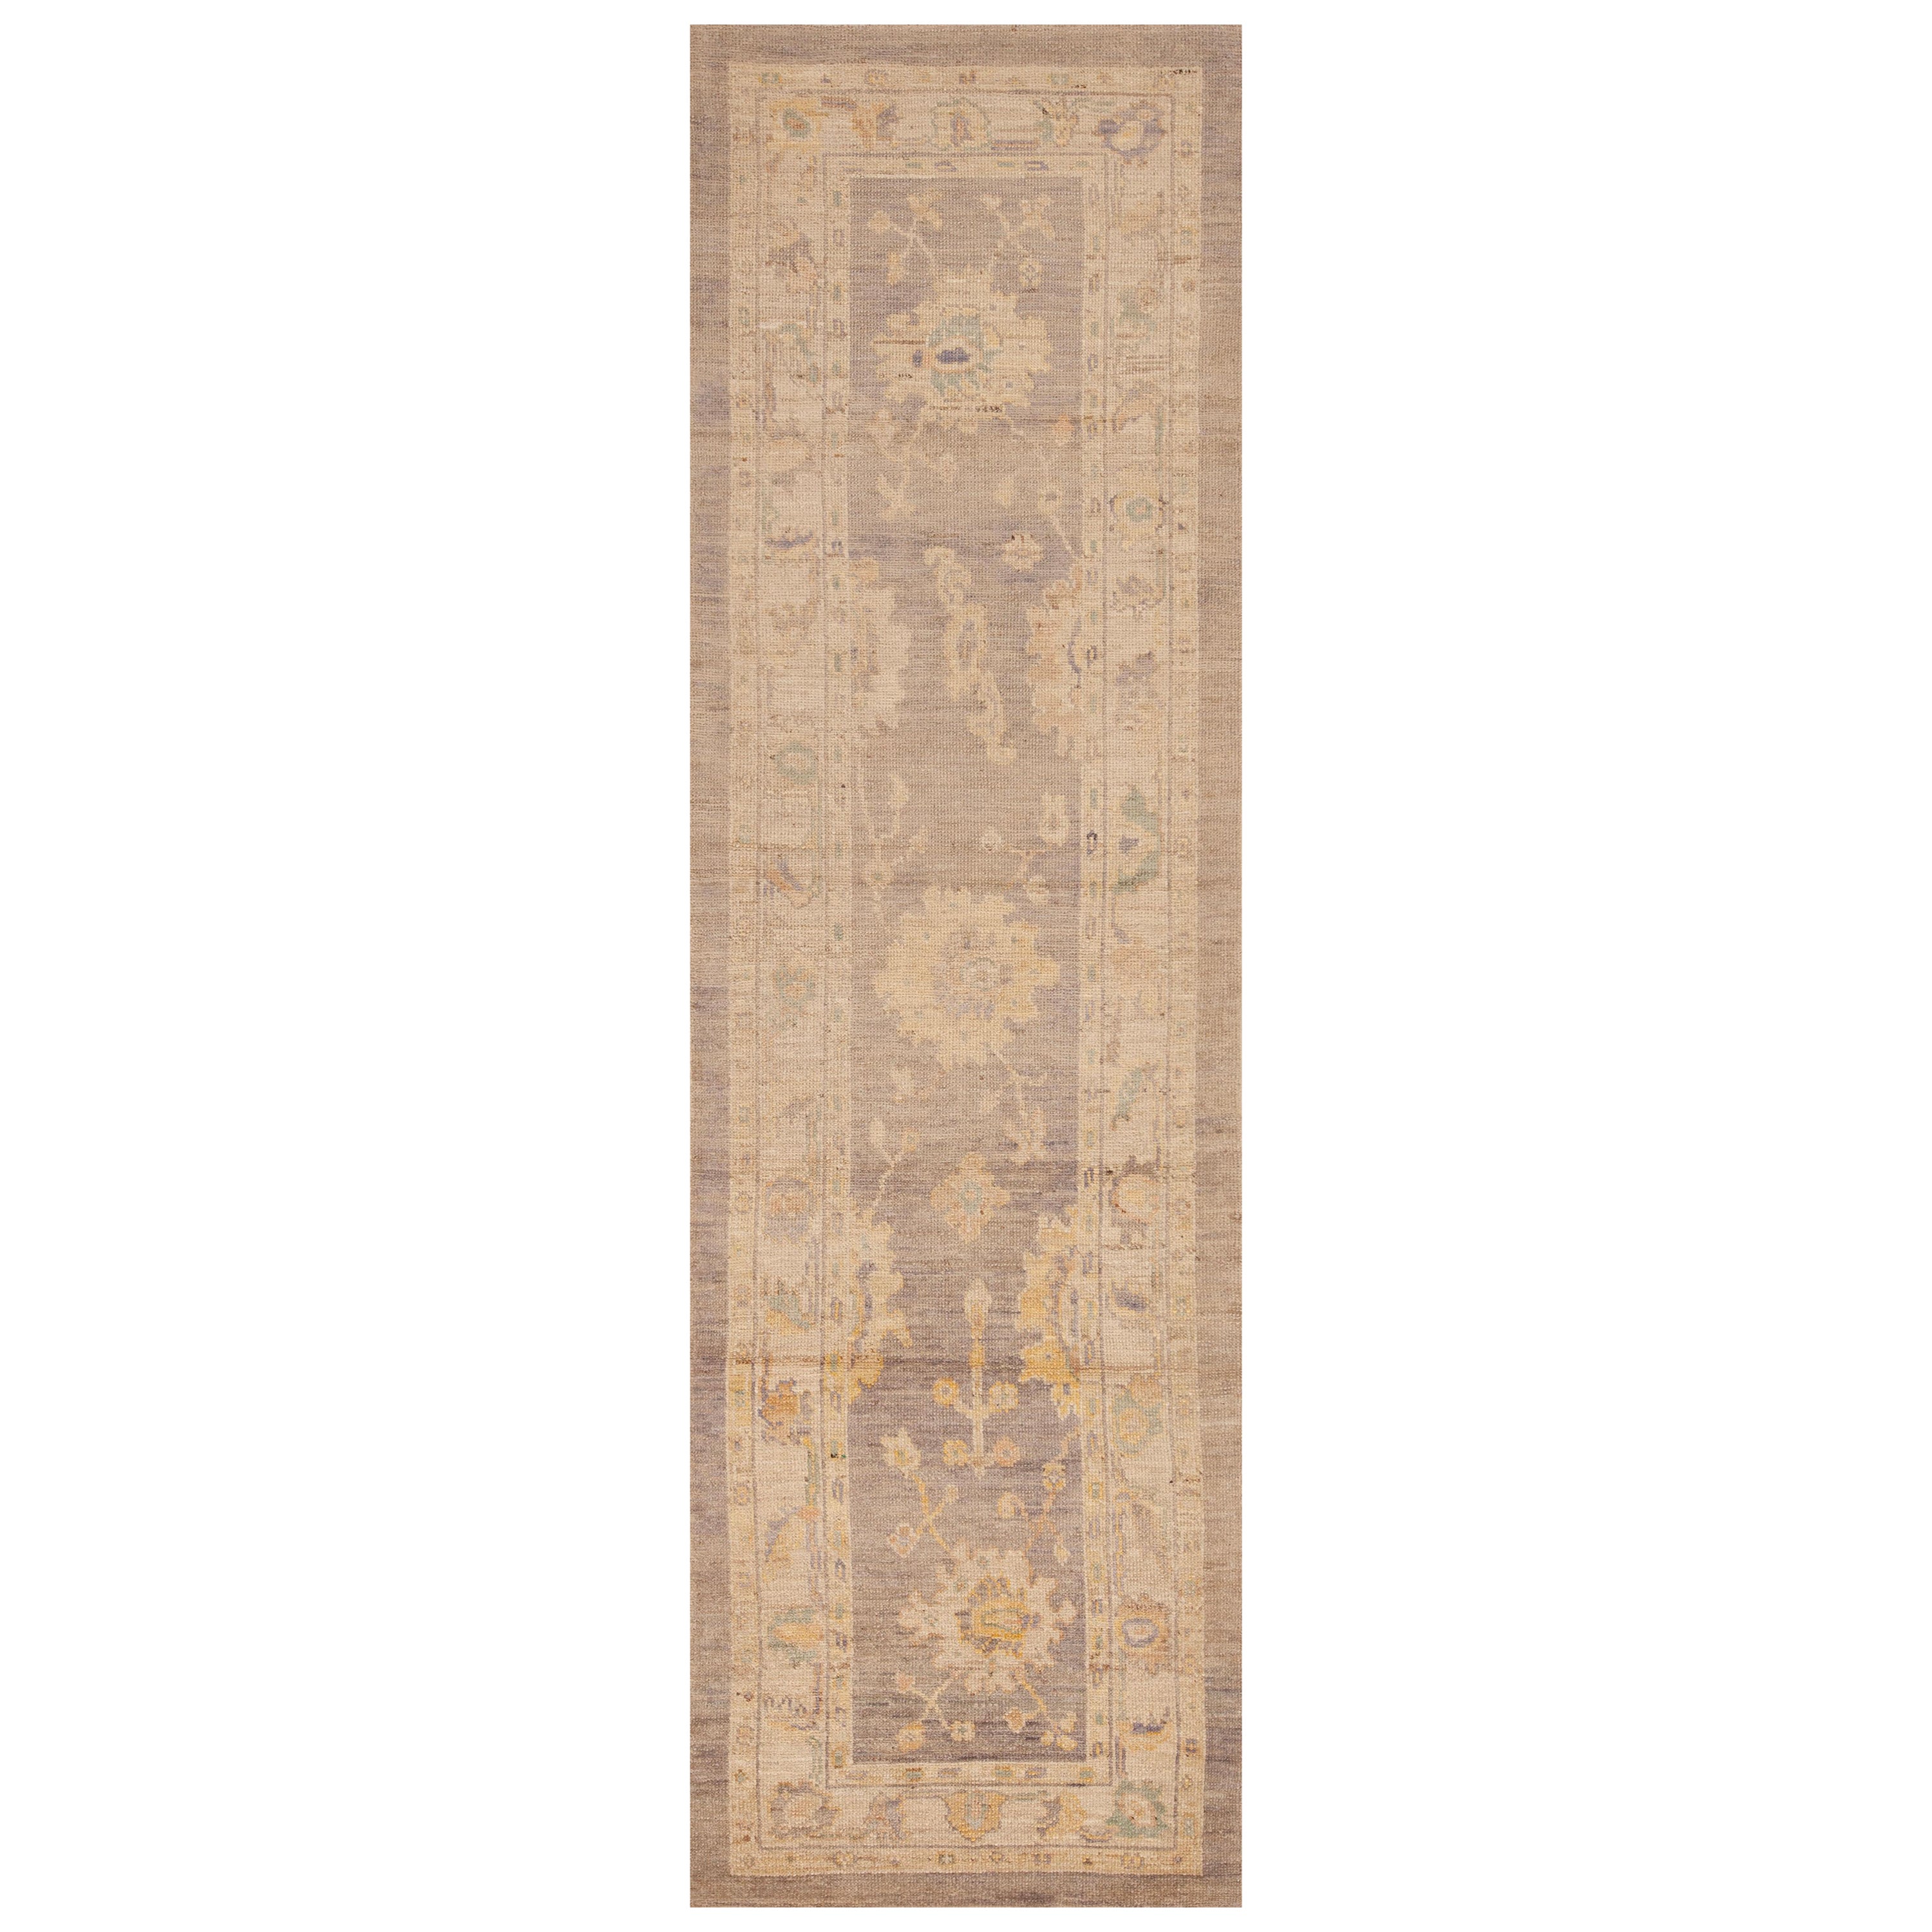 Collection Nazmiyal, tapis de couloir moderne turc Oushak, tribal et neutre, 3' x 10'